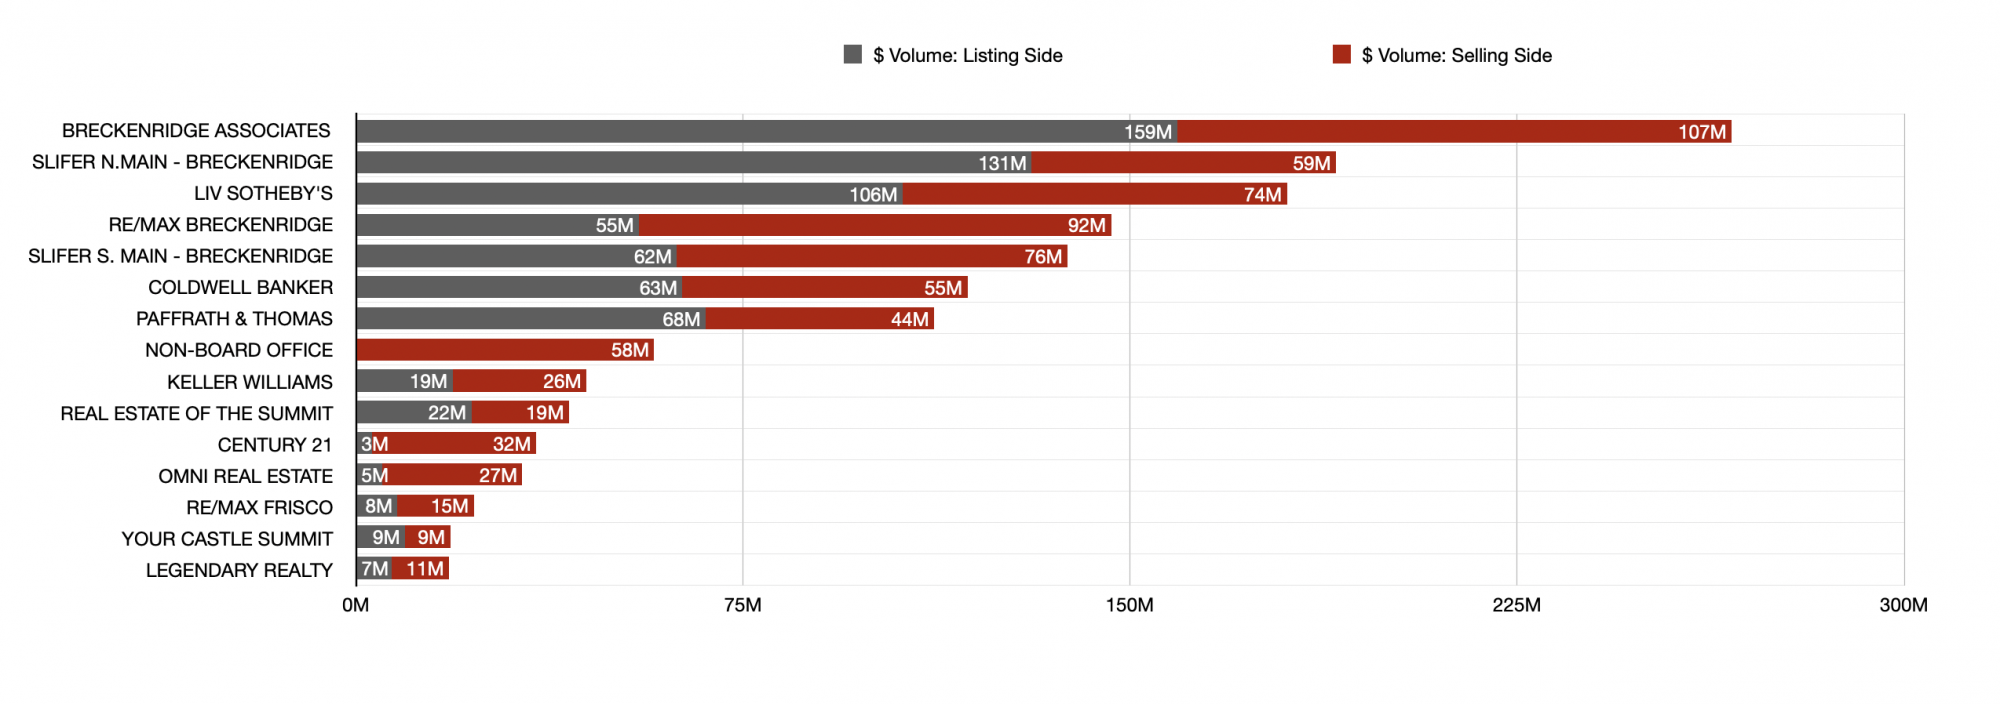 Total Breckenridge Real Estate Sales Volume 2020